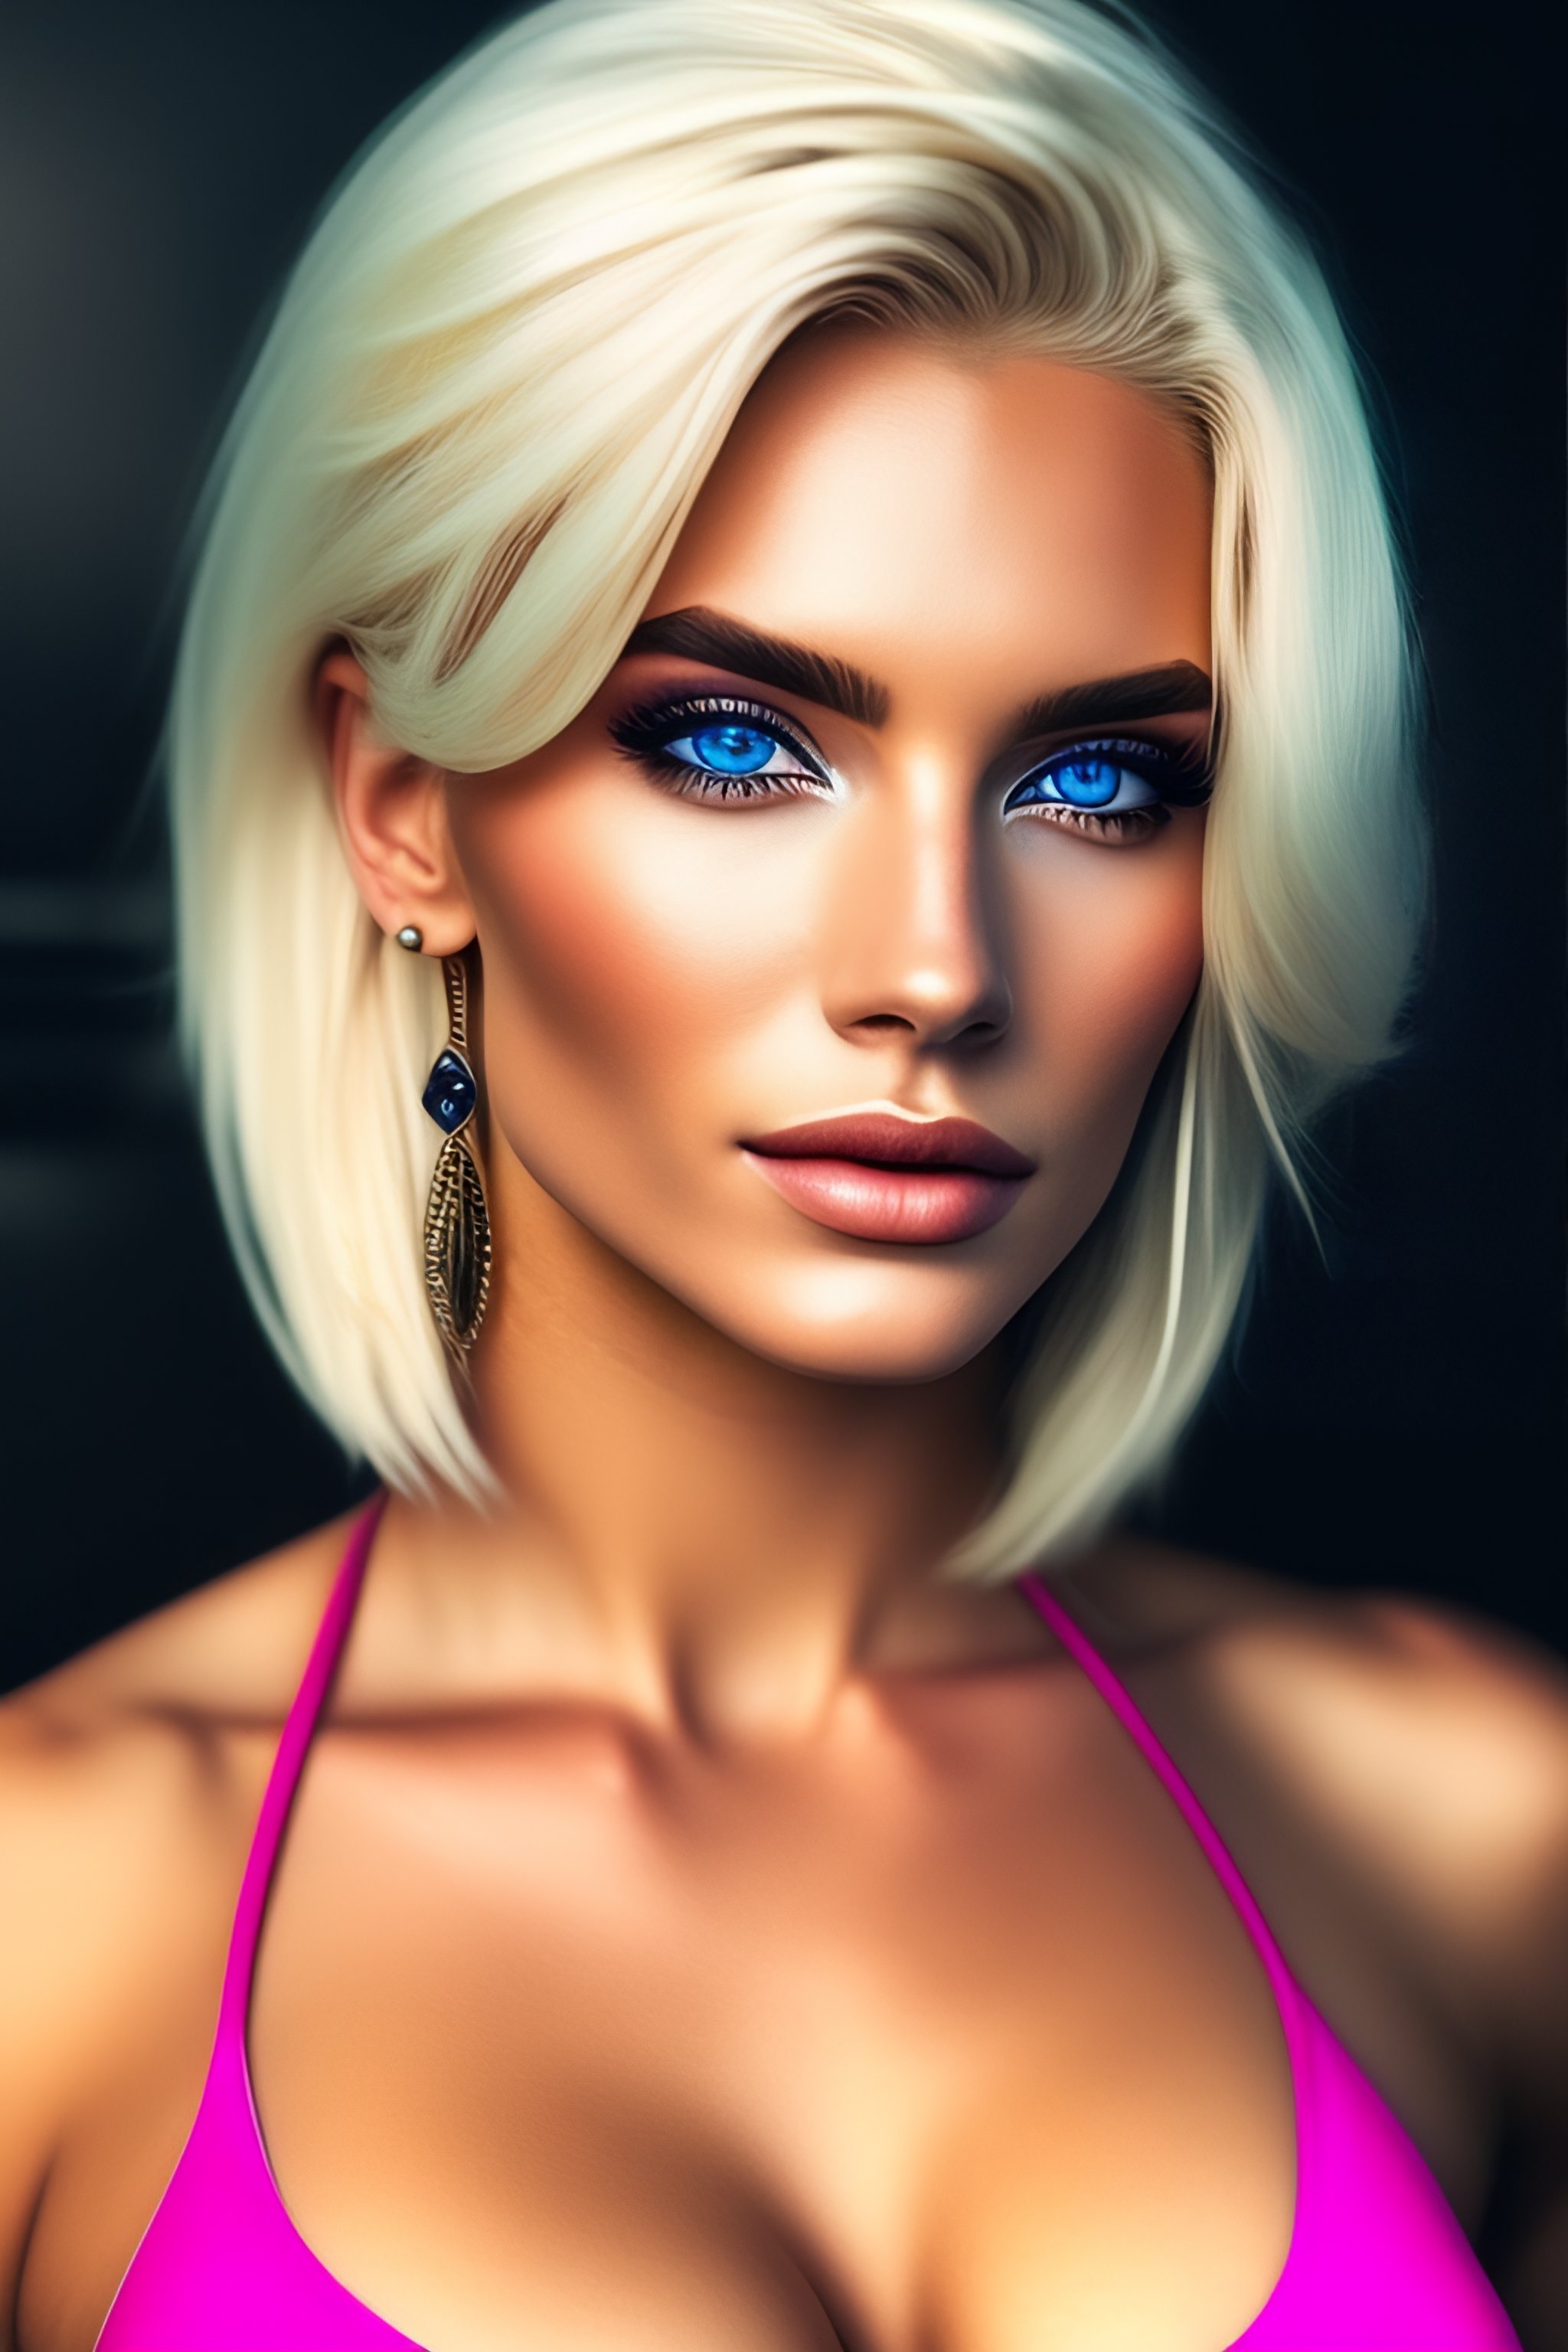 Lexica Year Old Female Platinum Blonde Hair Blue Eyes Broad Shoulders Hyper Realistic